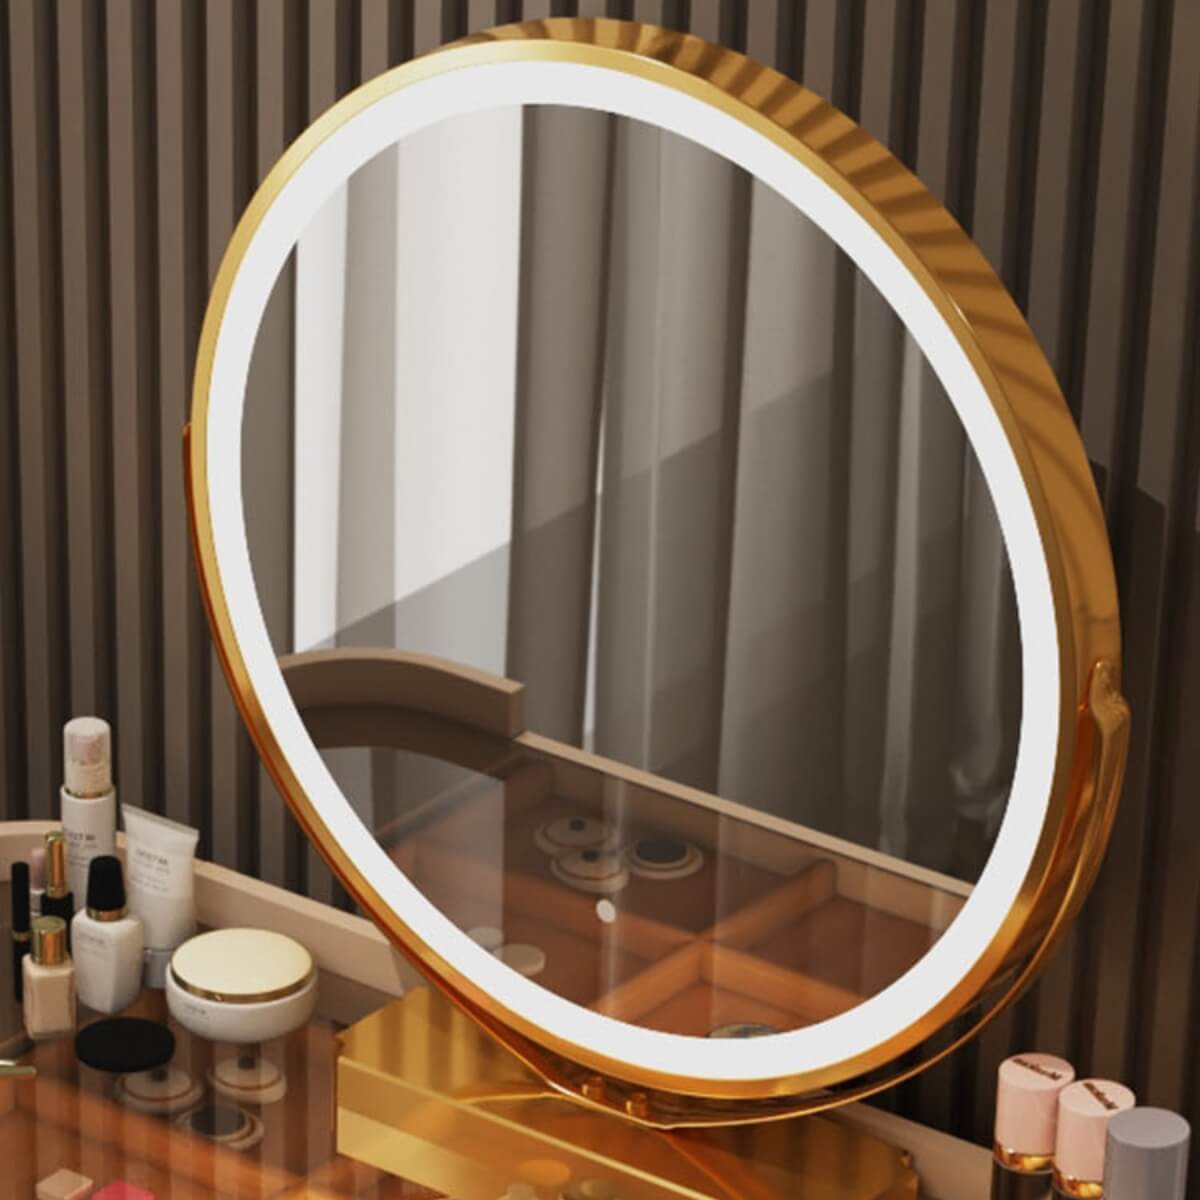 Season-Luxury Dressing Table With Mirror